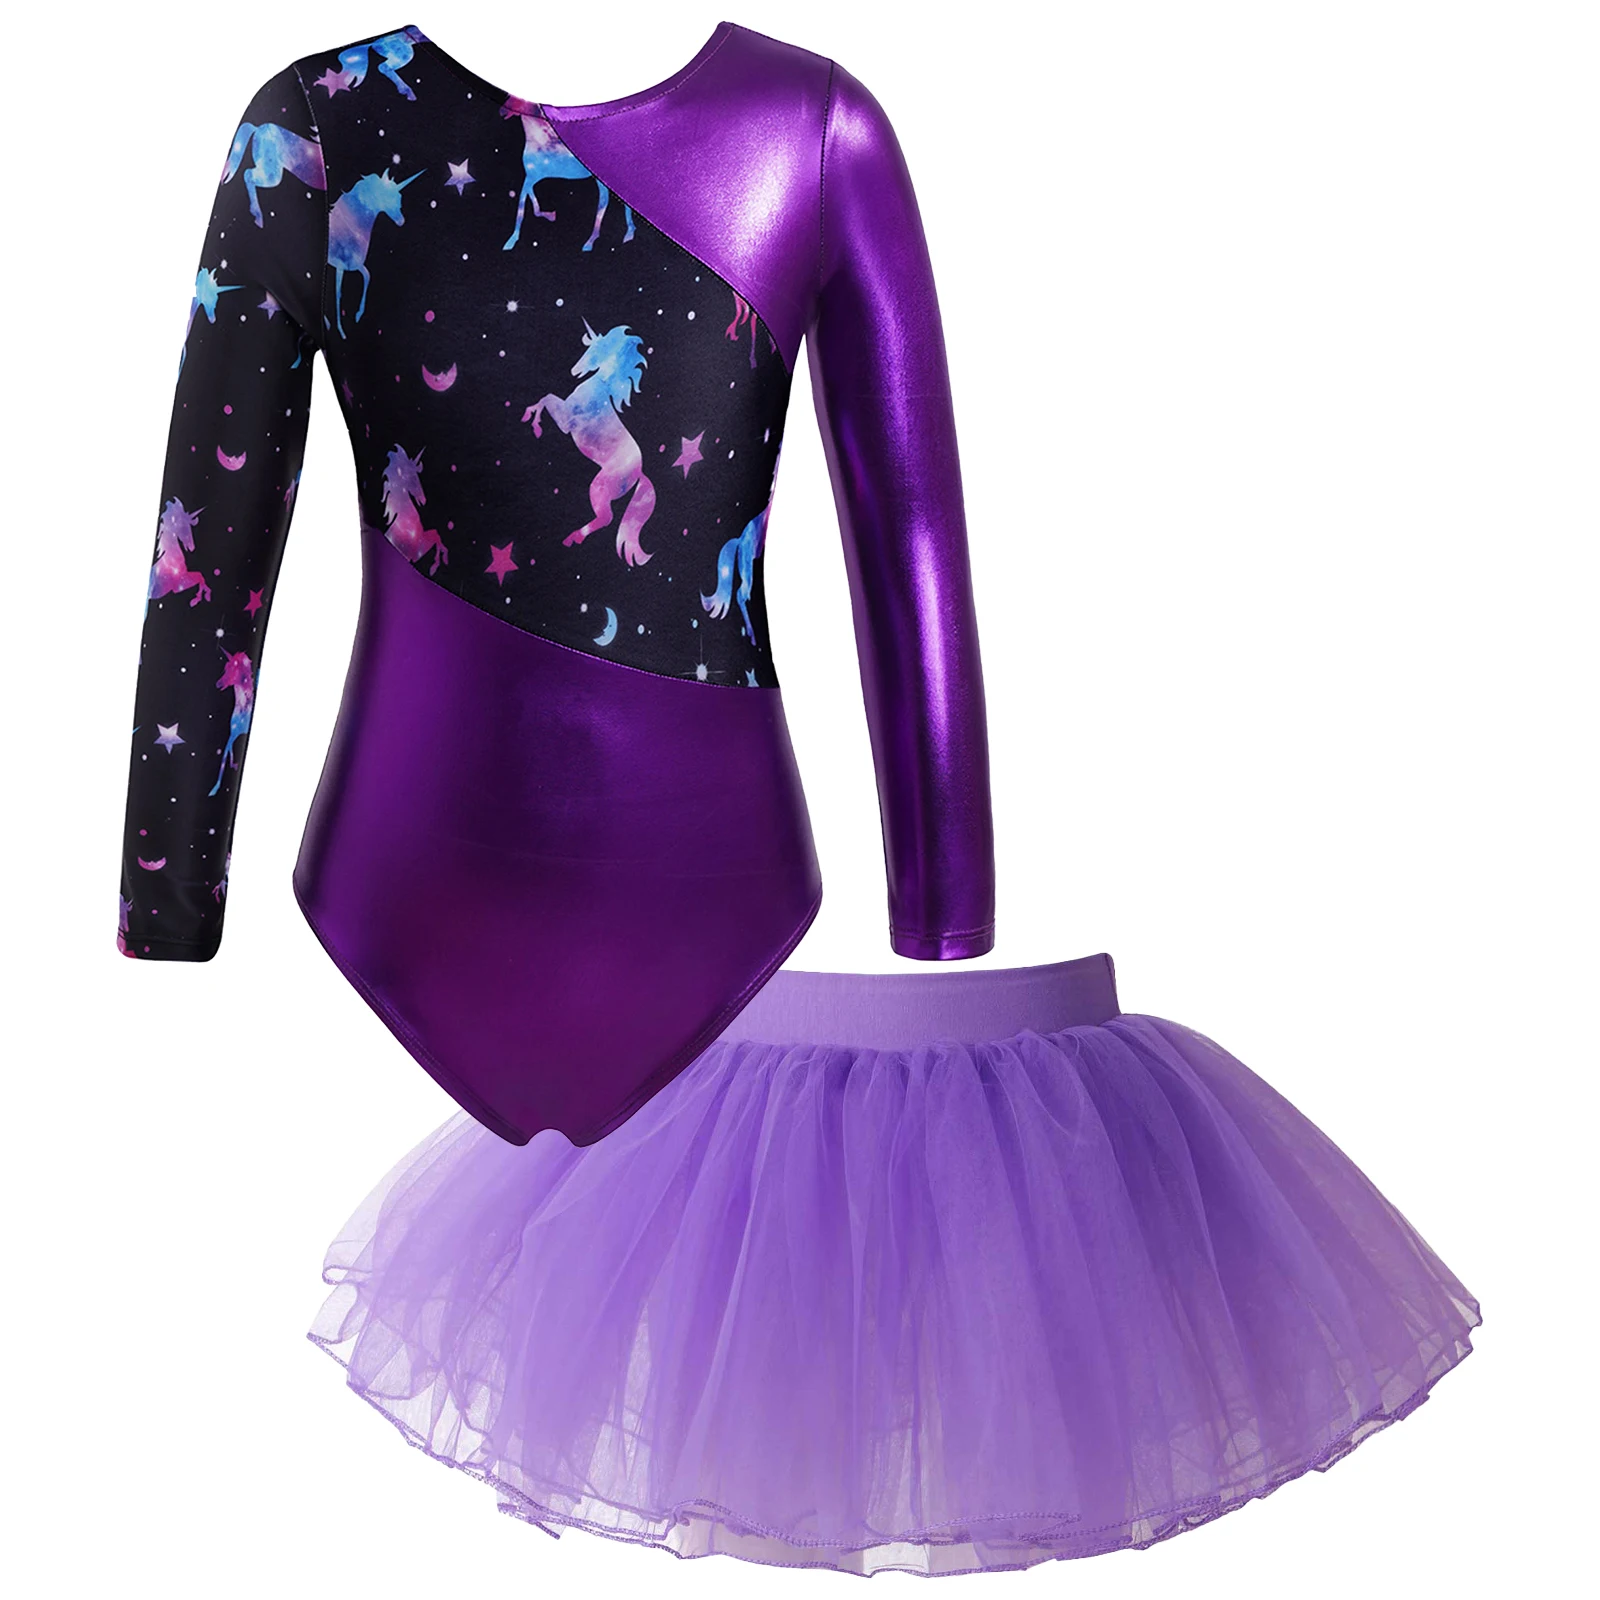 

Kids Girls Printed Long Sleeve Ballet Dance Dress Set 2 Pieces Gymnastic Leotard with Tutu Skirt Ballerina Costume Dancewear